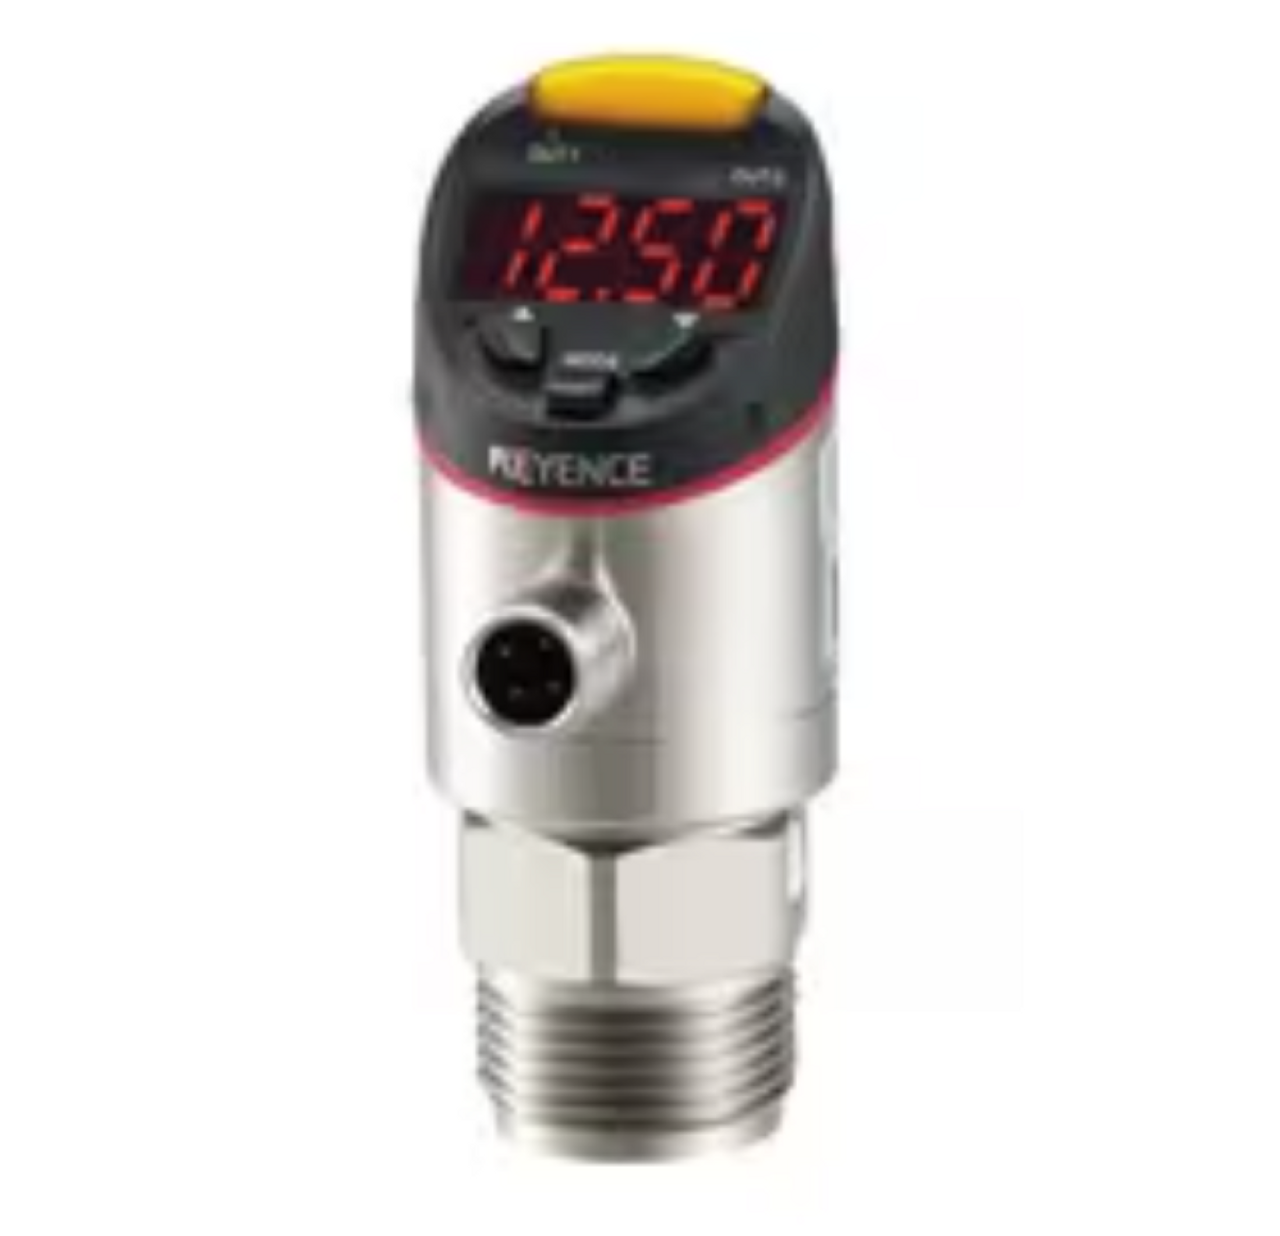 Keyence GP-M025 Digital Pressure Sensor, Positive-Pressure Type, 2.5 MPa [New]